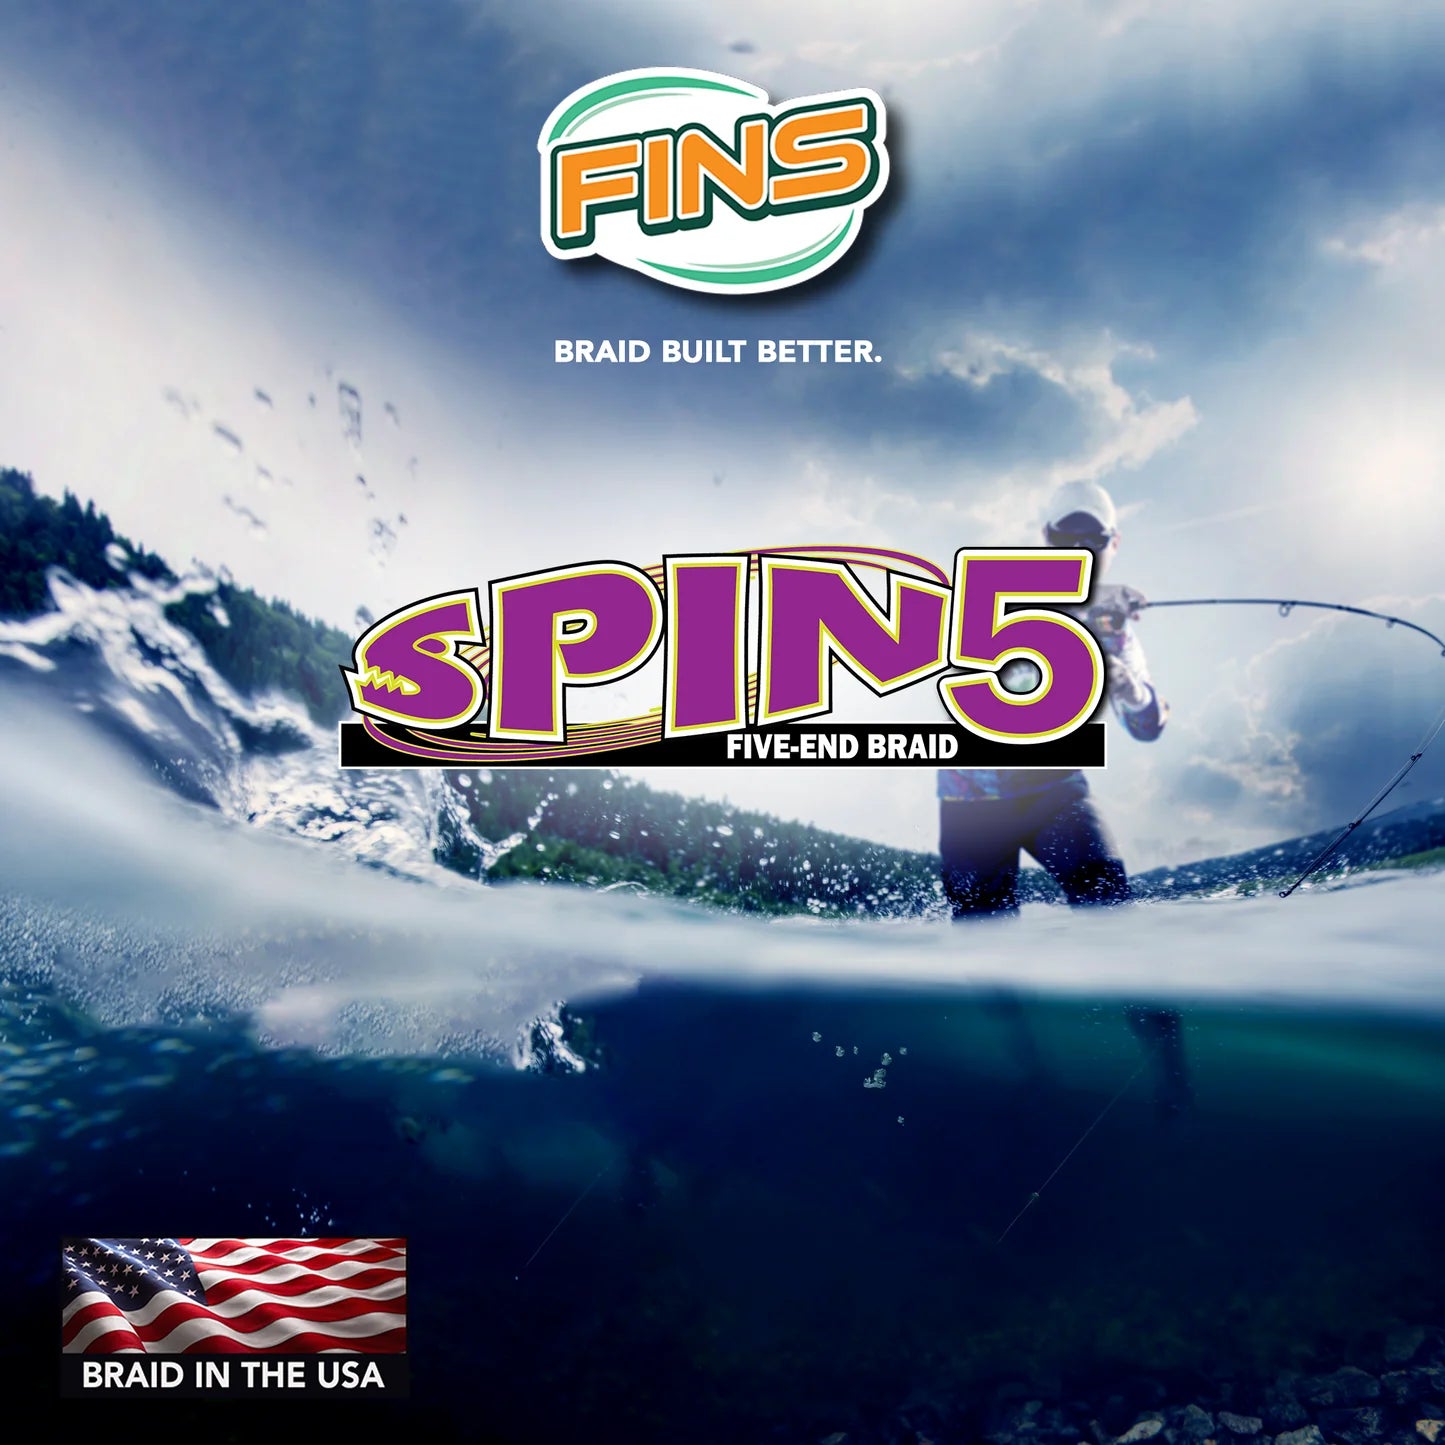 FINS Spin5 Fishing Braid